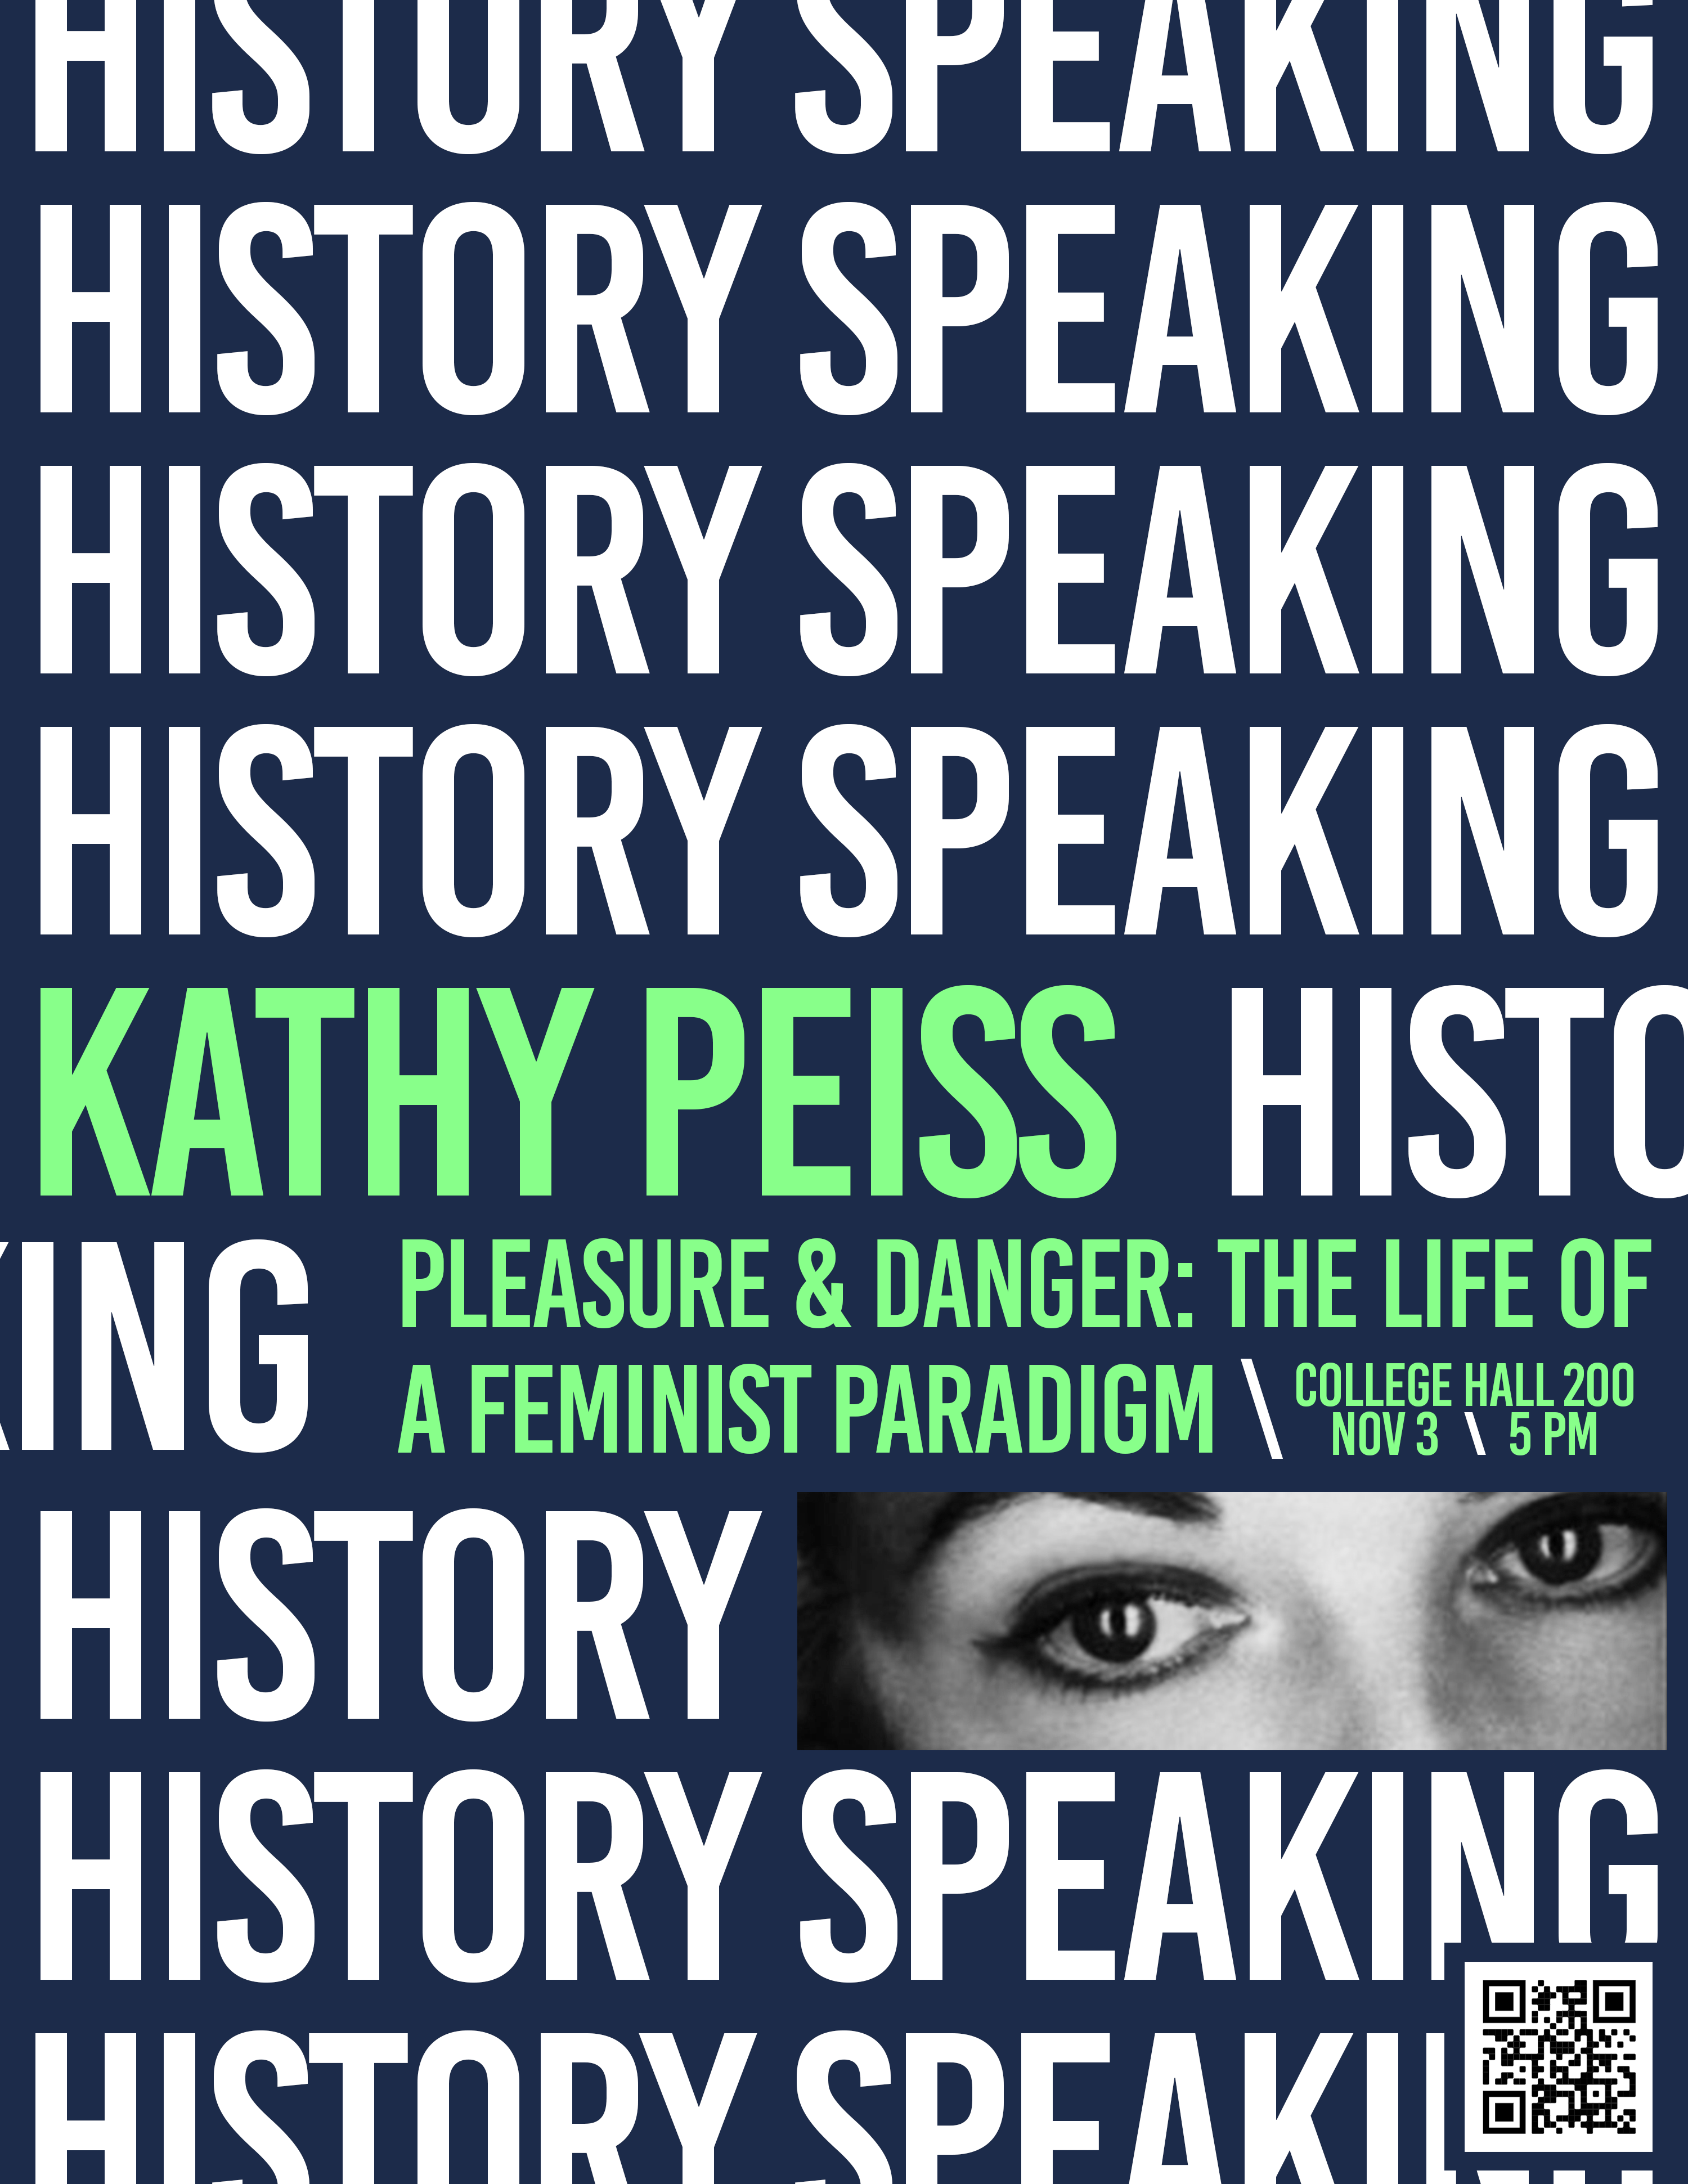 Peiss History Speaking Flyer